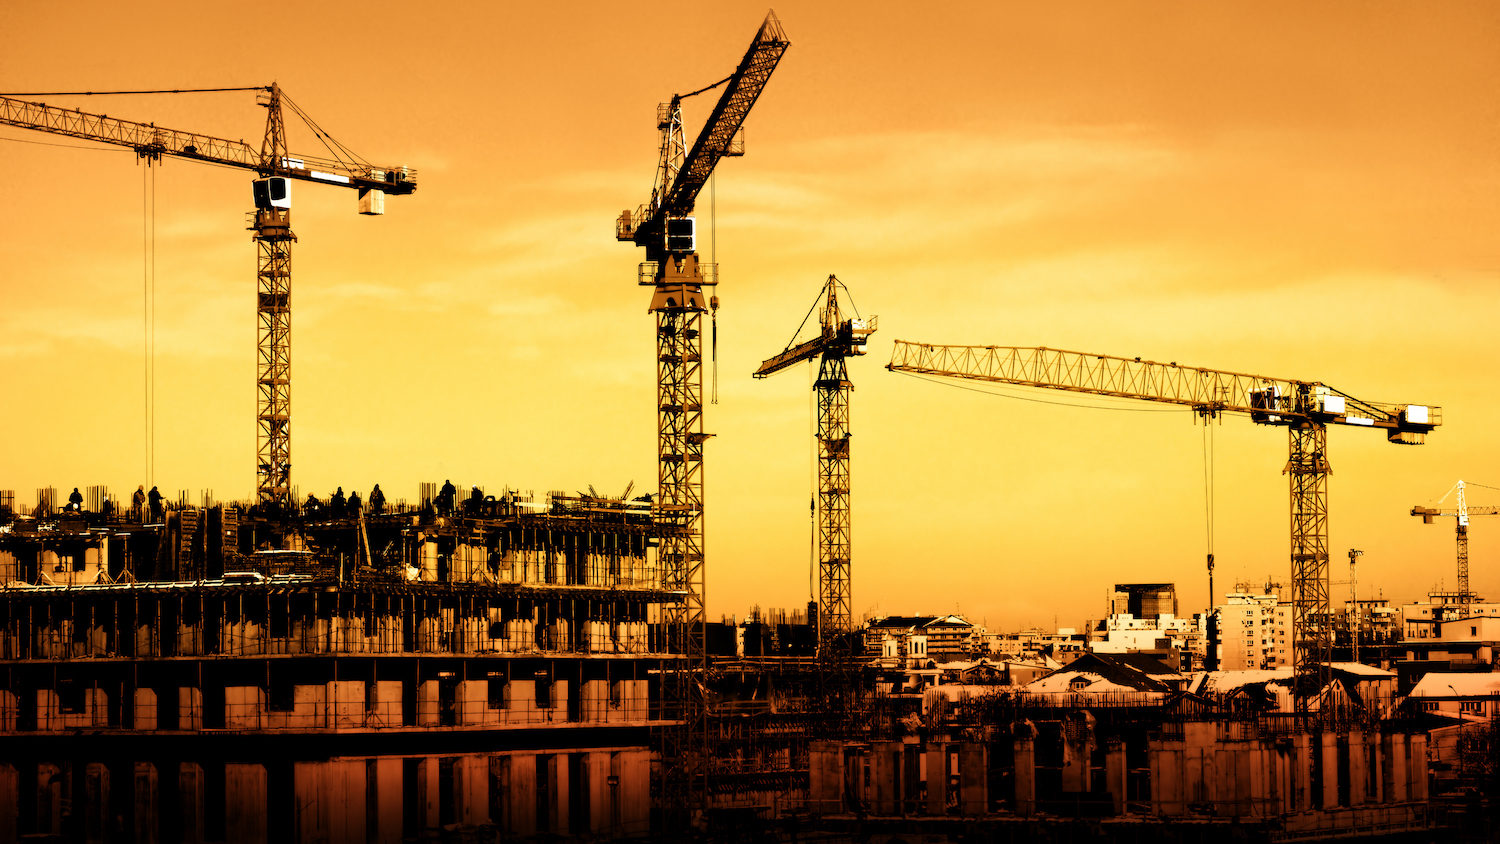 Cranes on a construction site (image: dreamstime_Cornelius20)